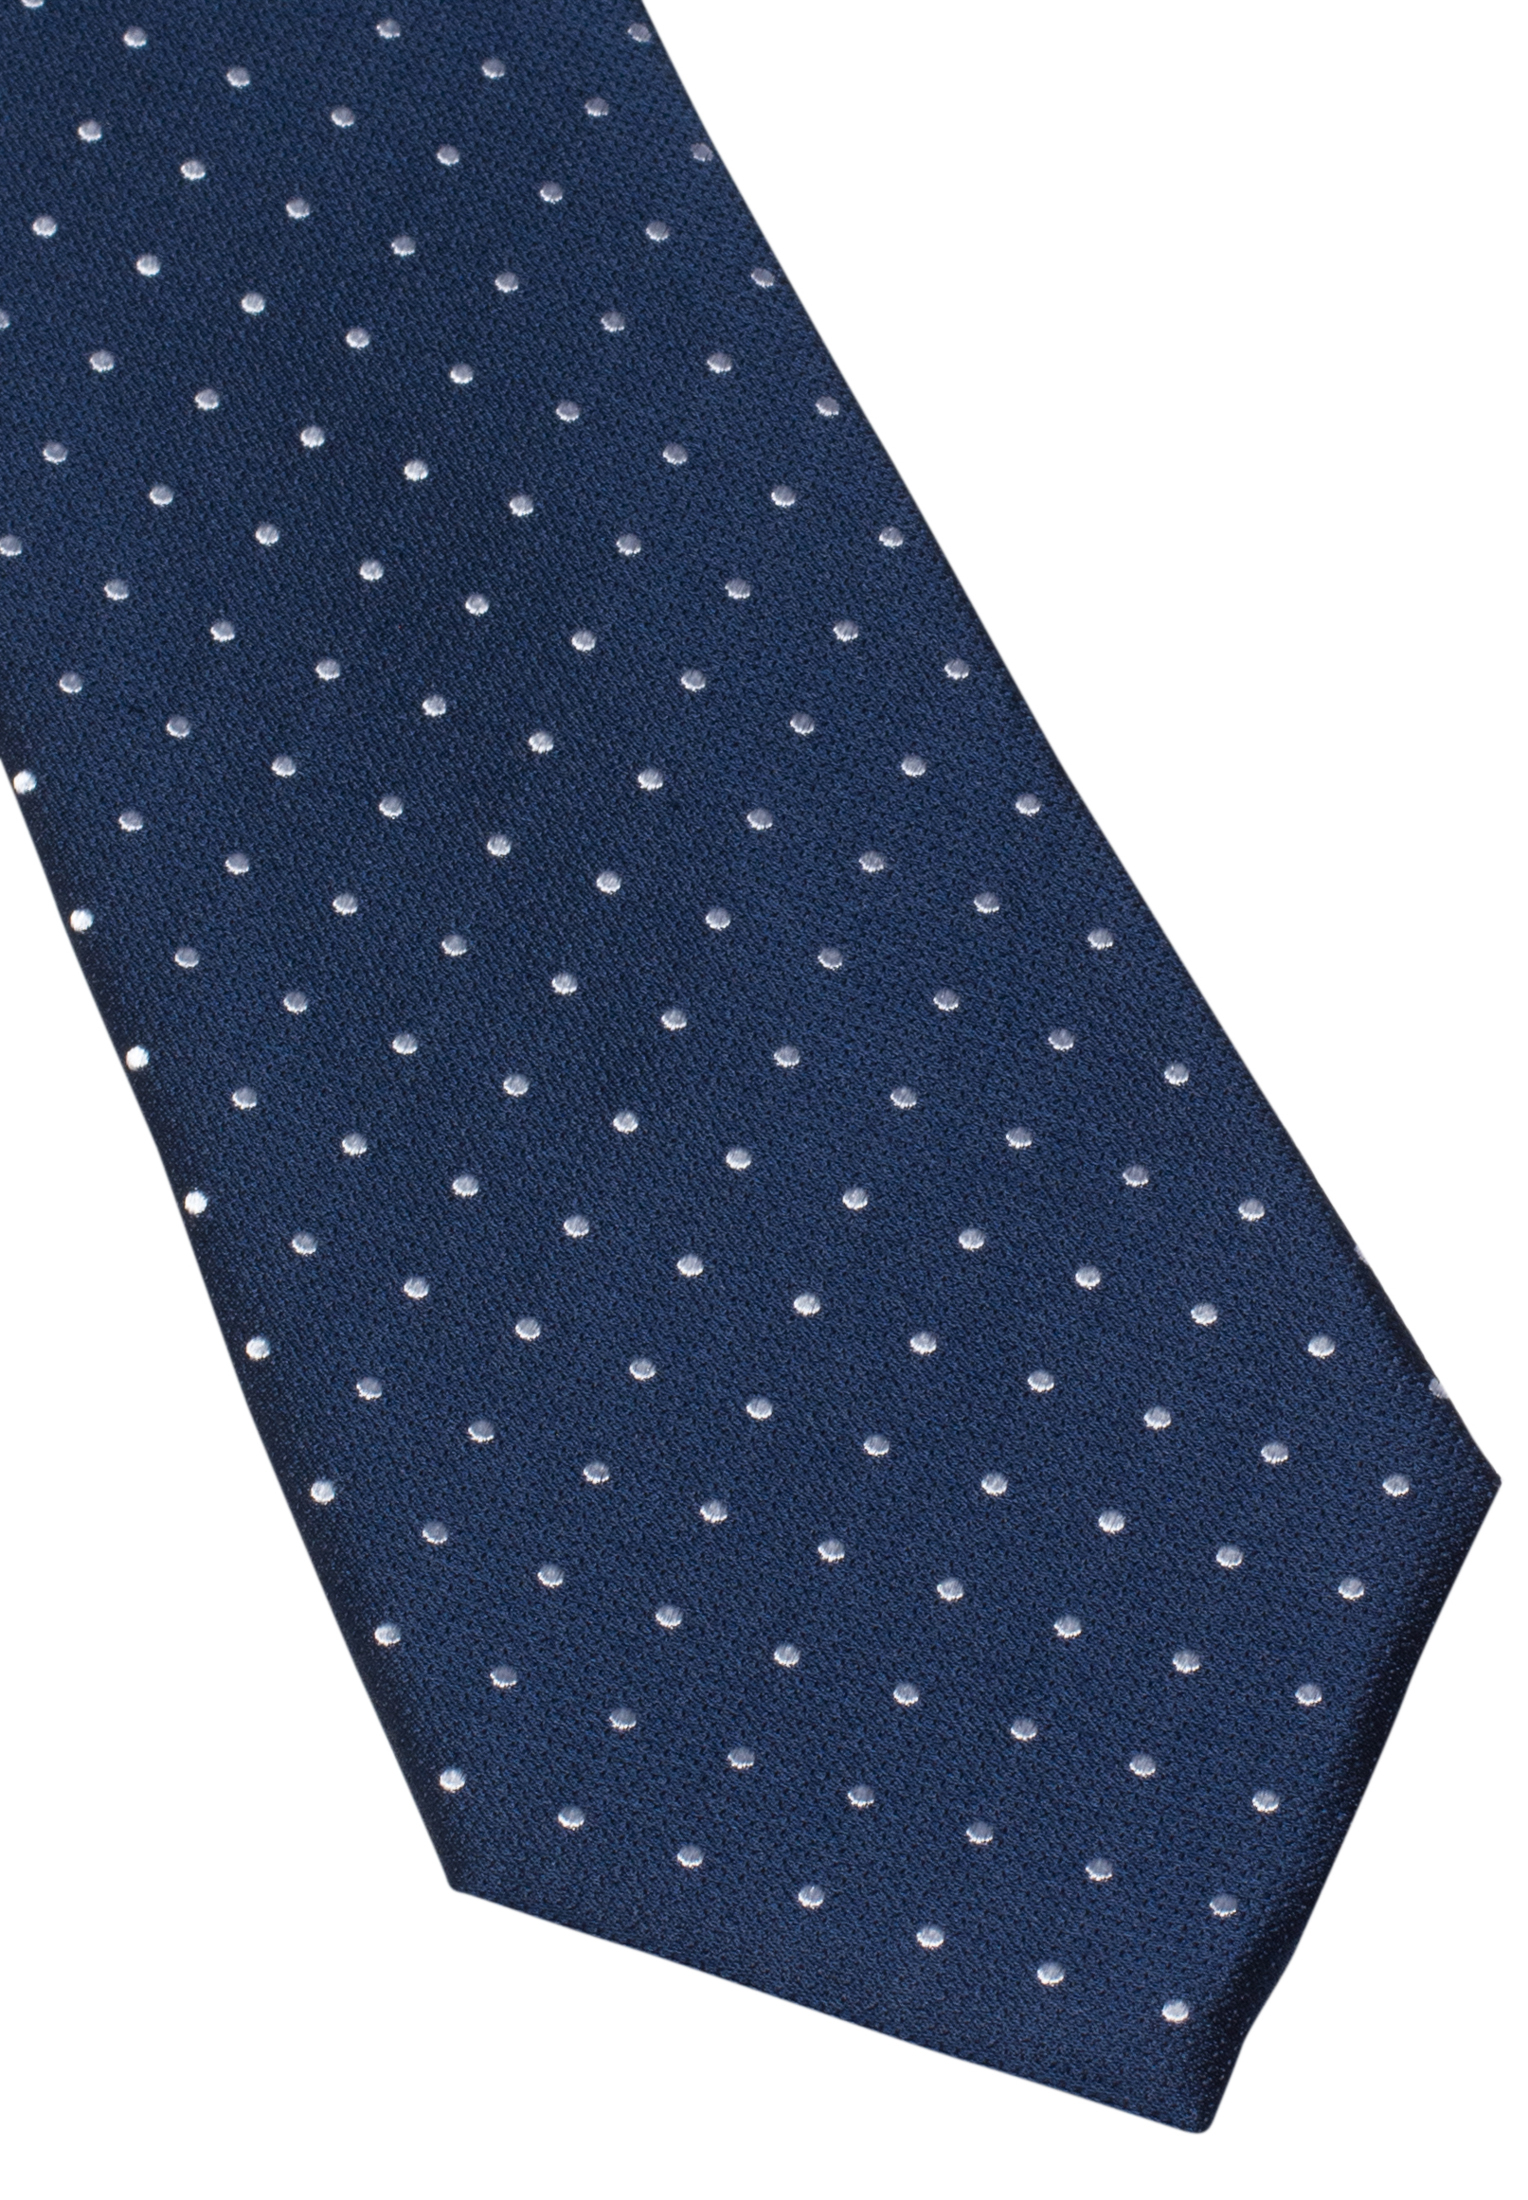 Krawatte | dunkelblau 1AC00022-01-81-142 dunkelblau in getupft 142 | |